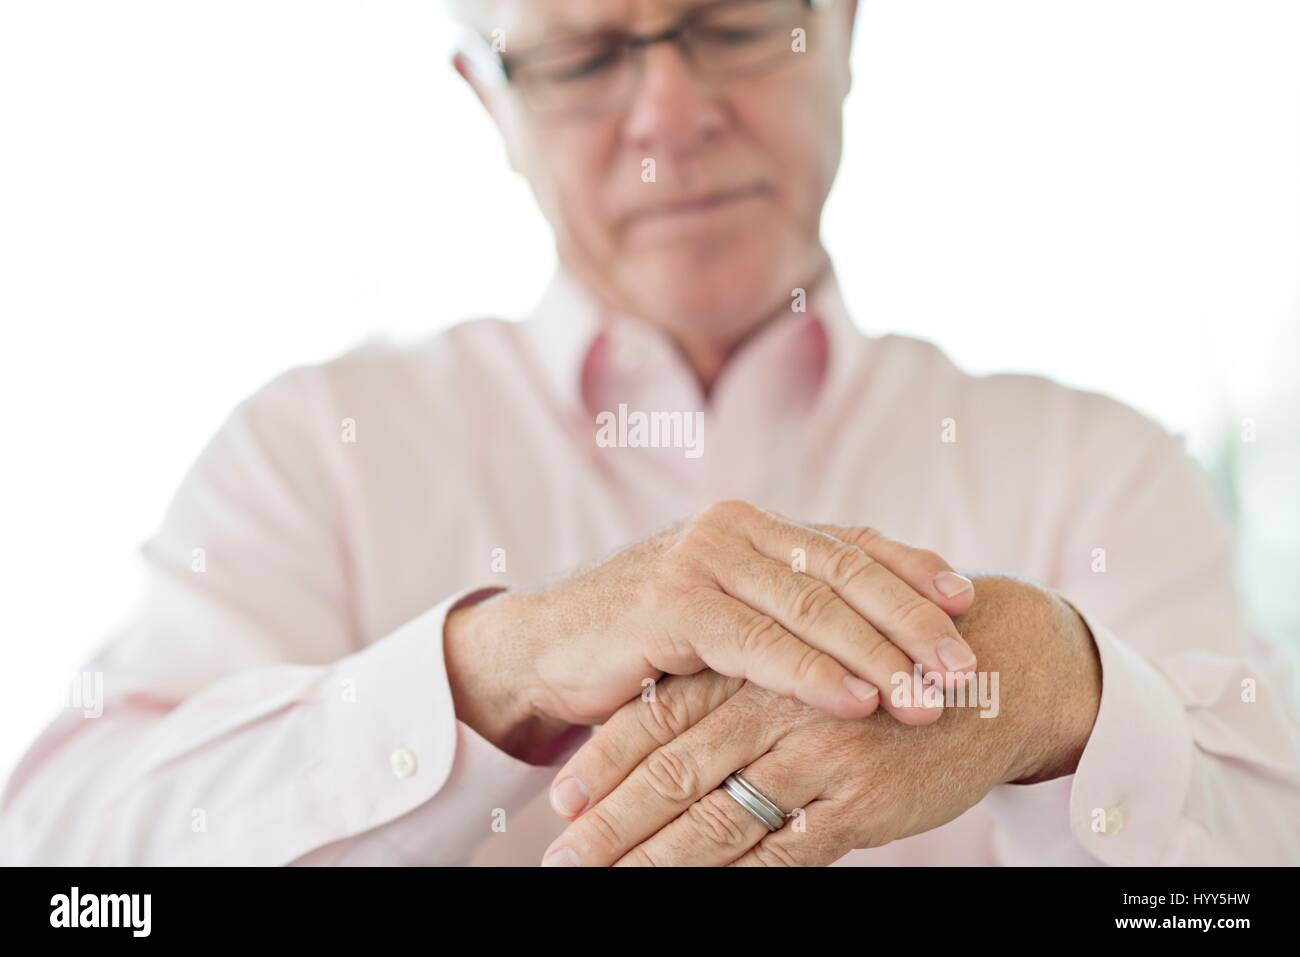 Senior man rubbing painful hand. Stock Photo